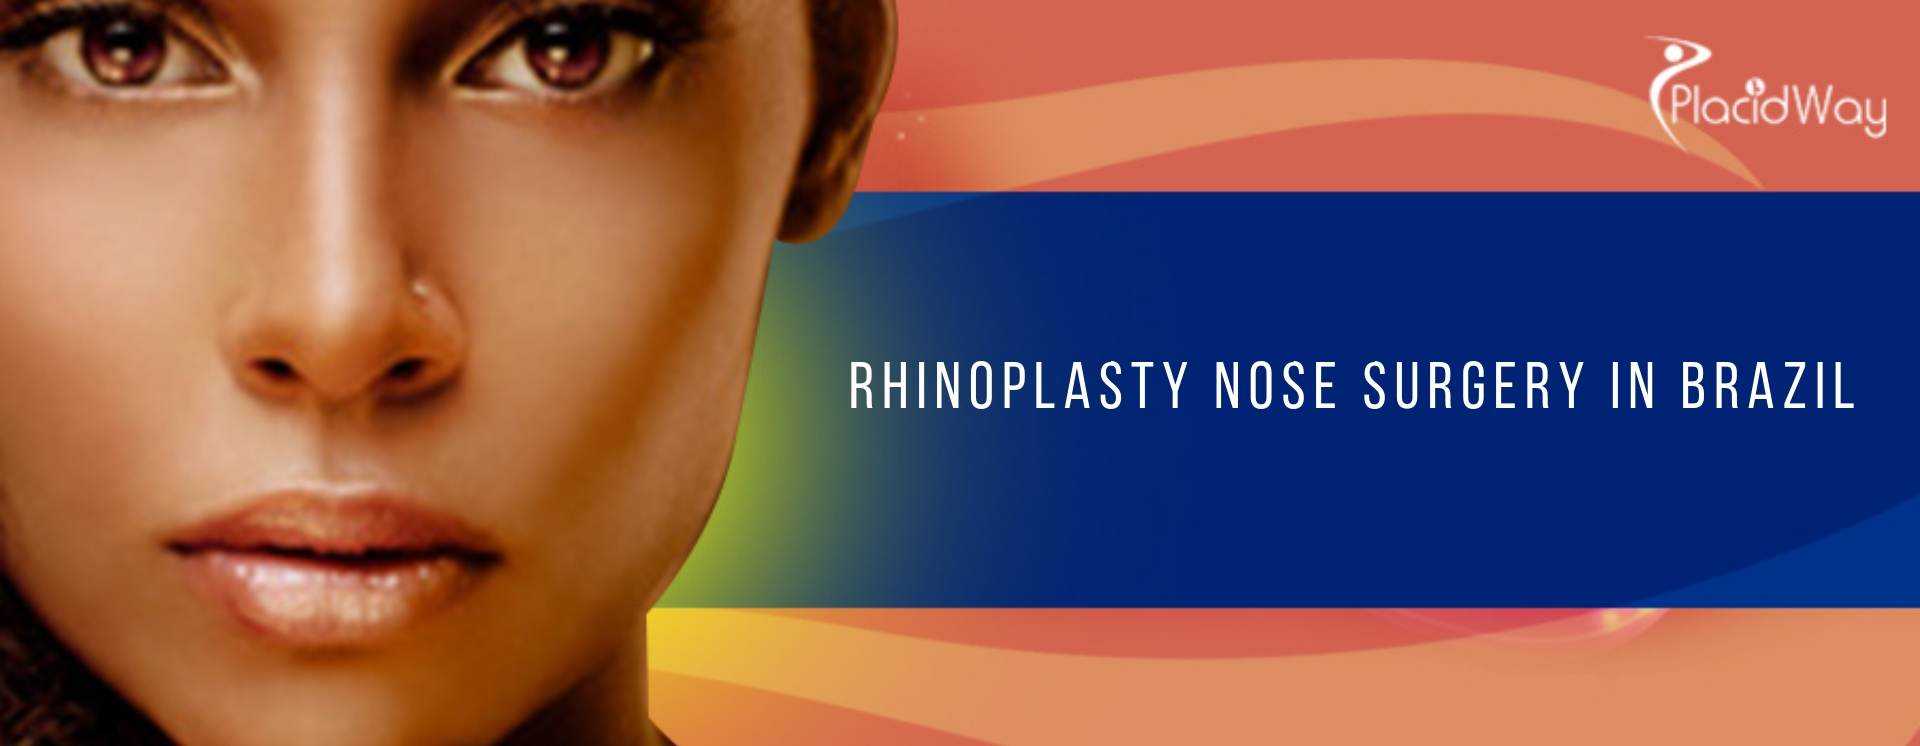 Rhinoplasty Nose Surgery in Brazil